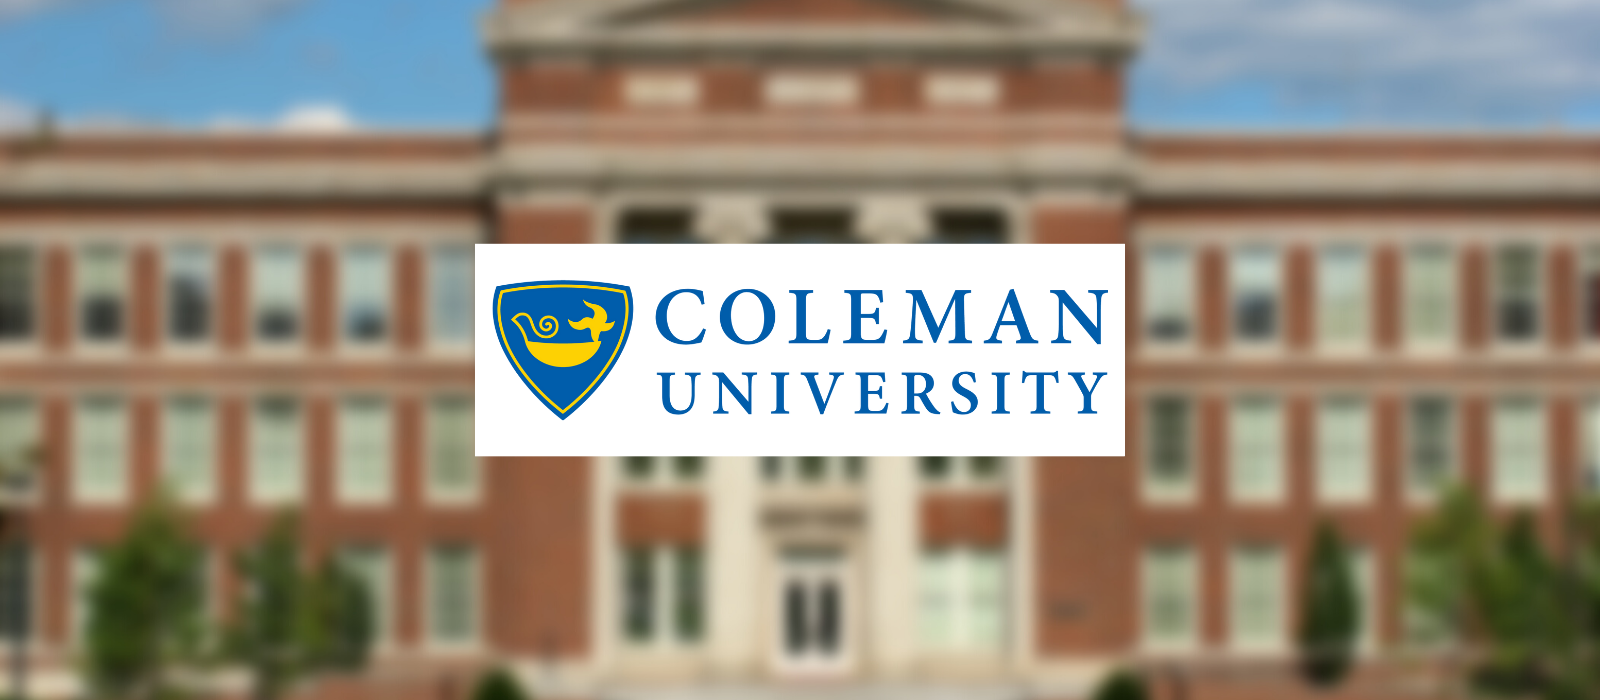 HGP to Mange Auction of Complete Coleman University Campus Closure